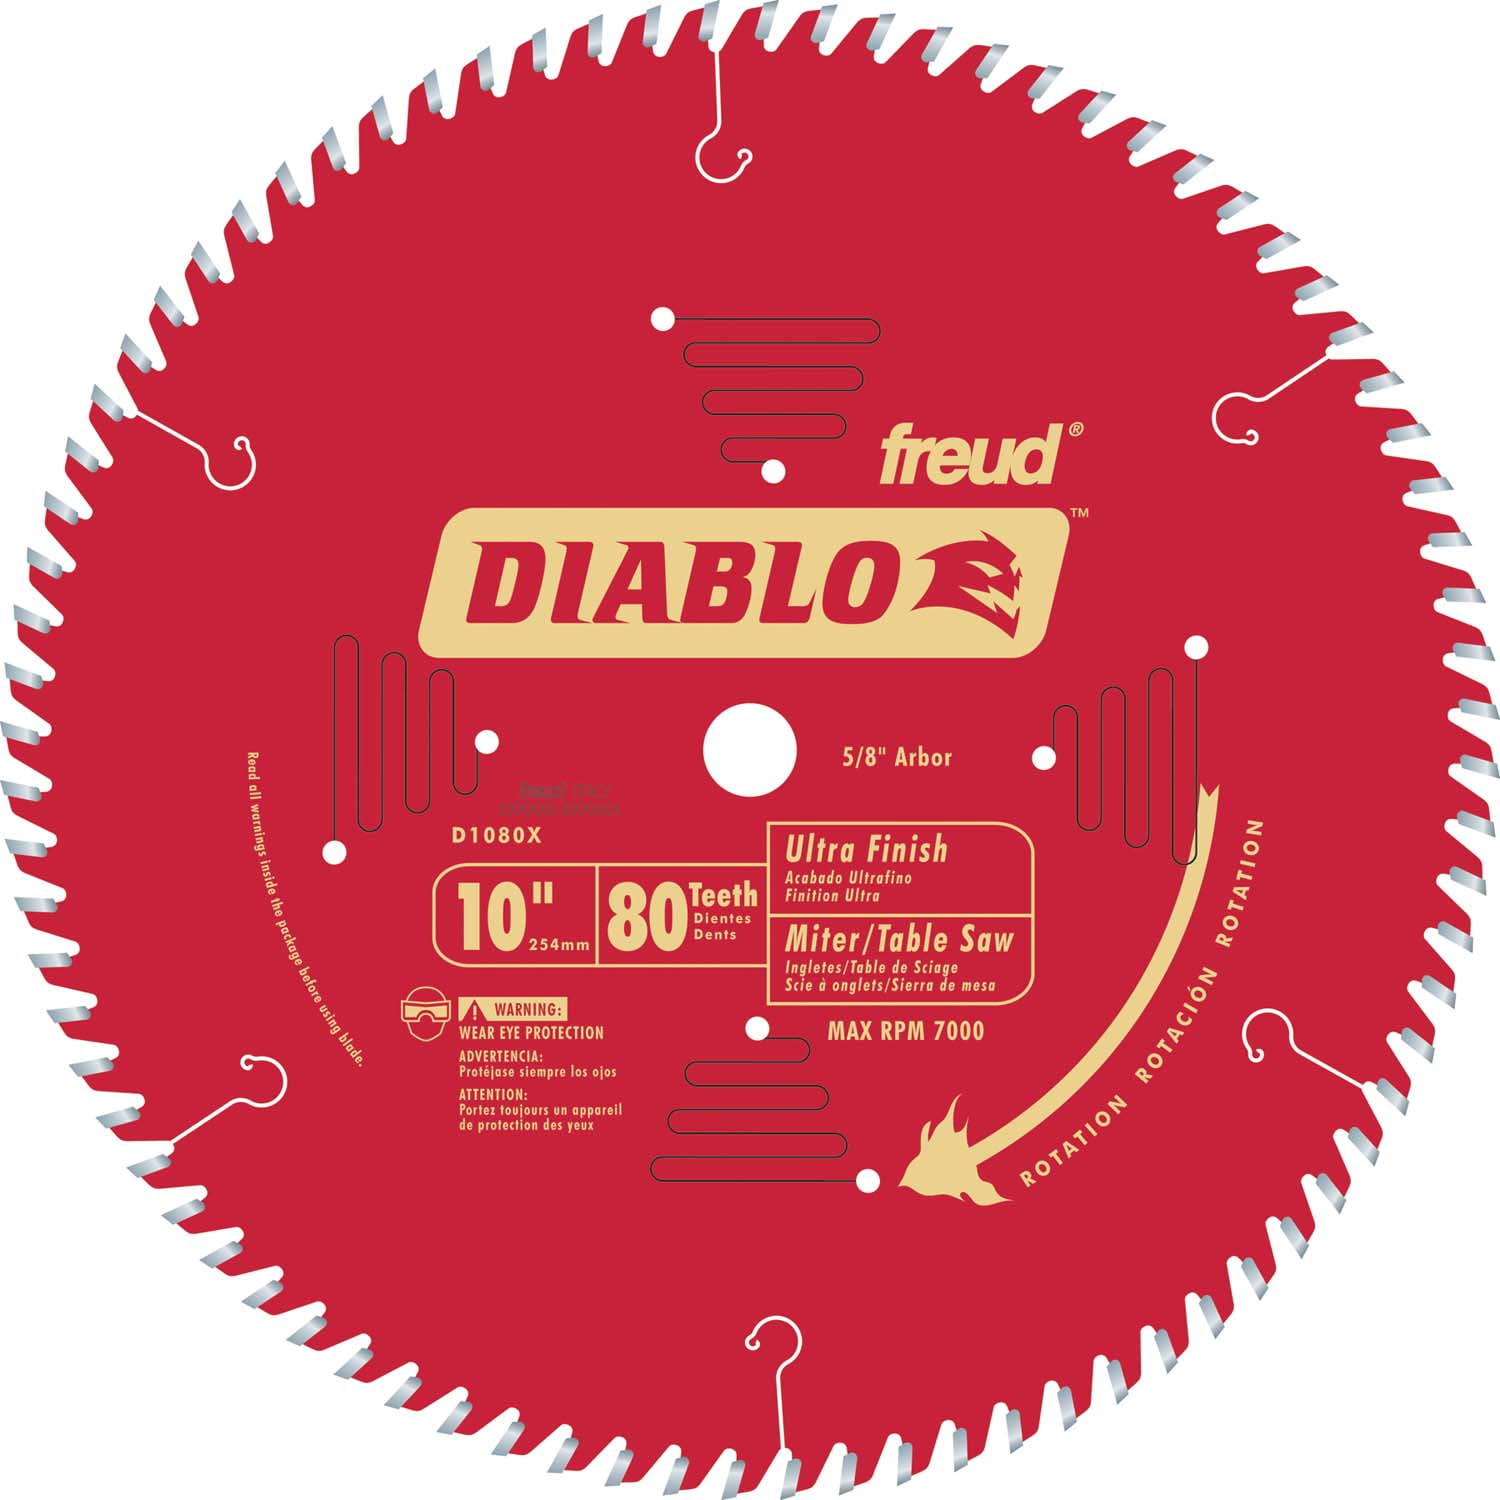 Freud D1050X Diablo 10" 50-tooth ATB Combo Saw Blade w/5/8" Arbor&PermaShield 